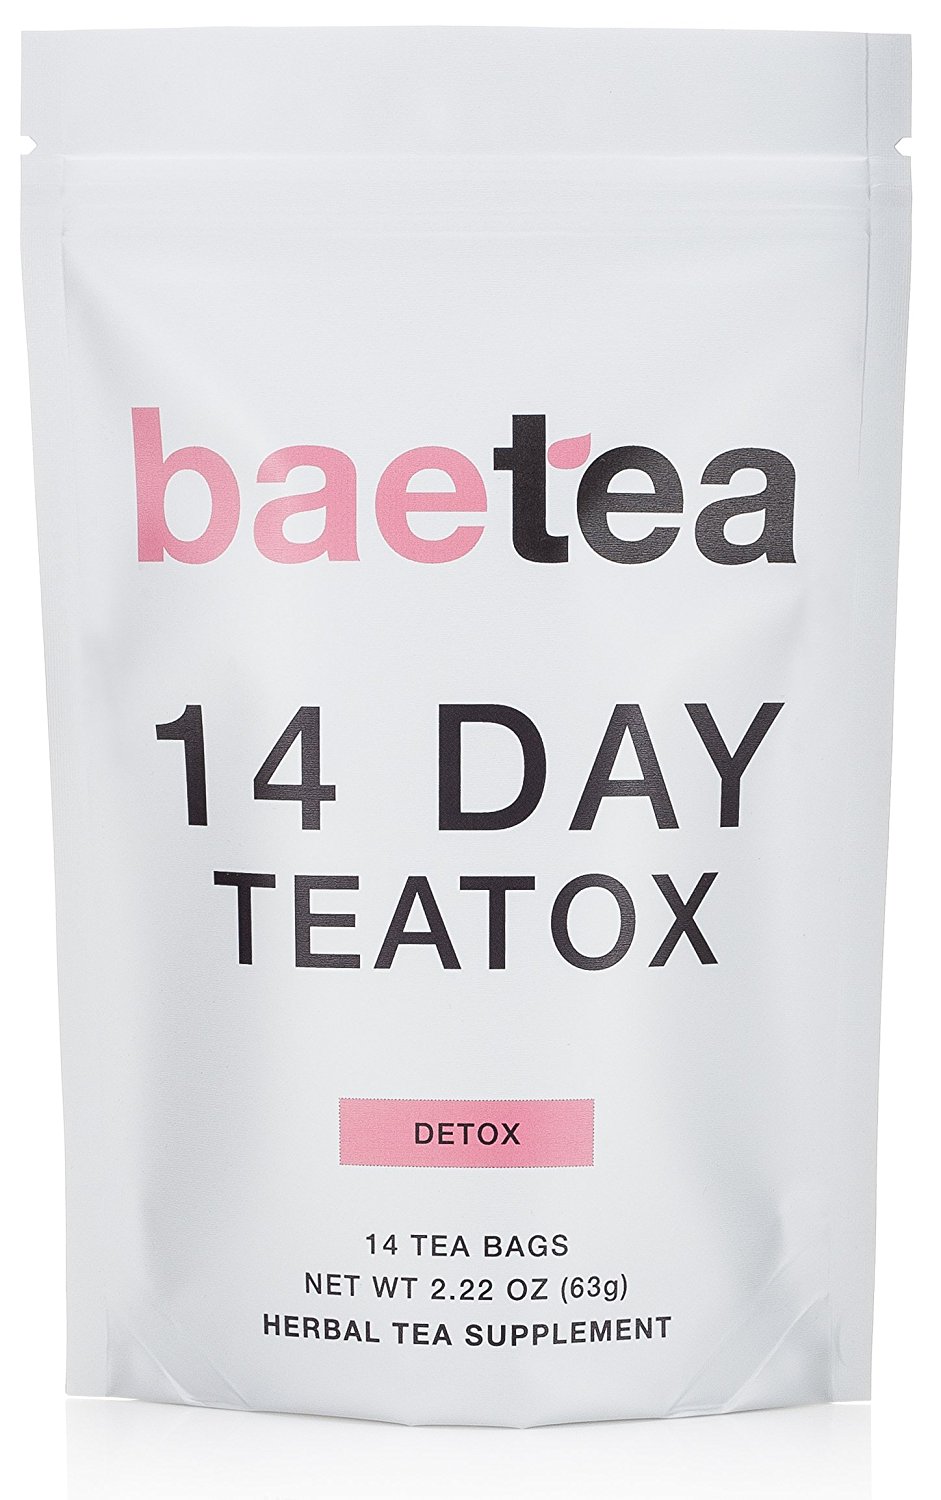 Baetea 14 Day Teatox Gentle Detox Weight Loss Tea 